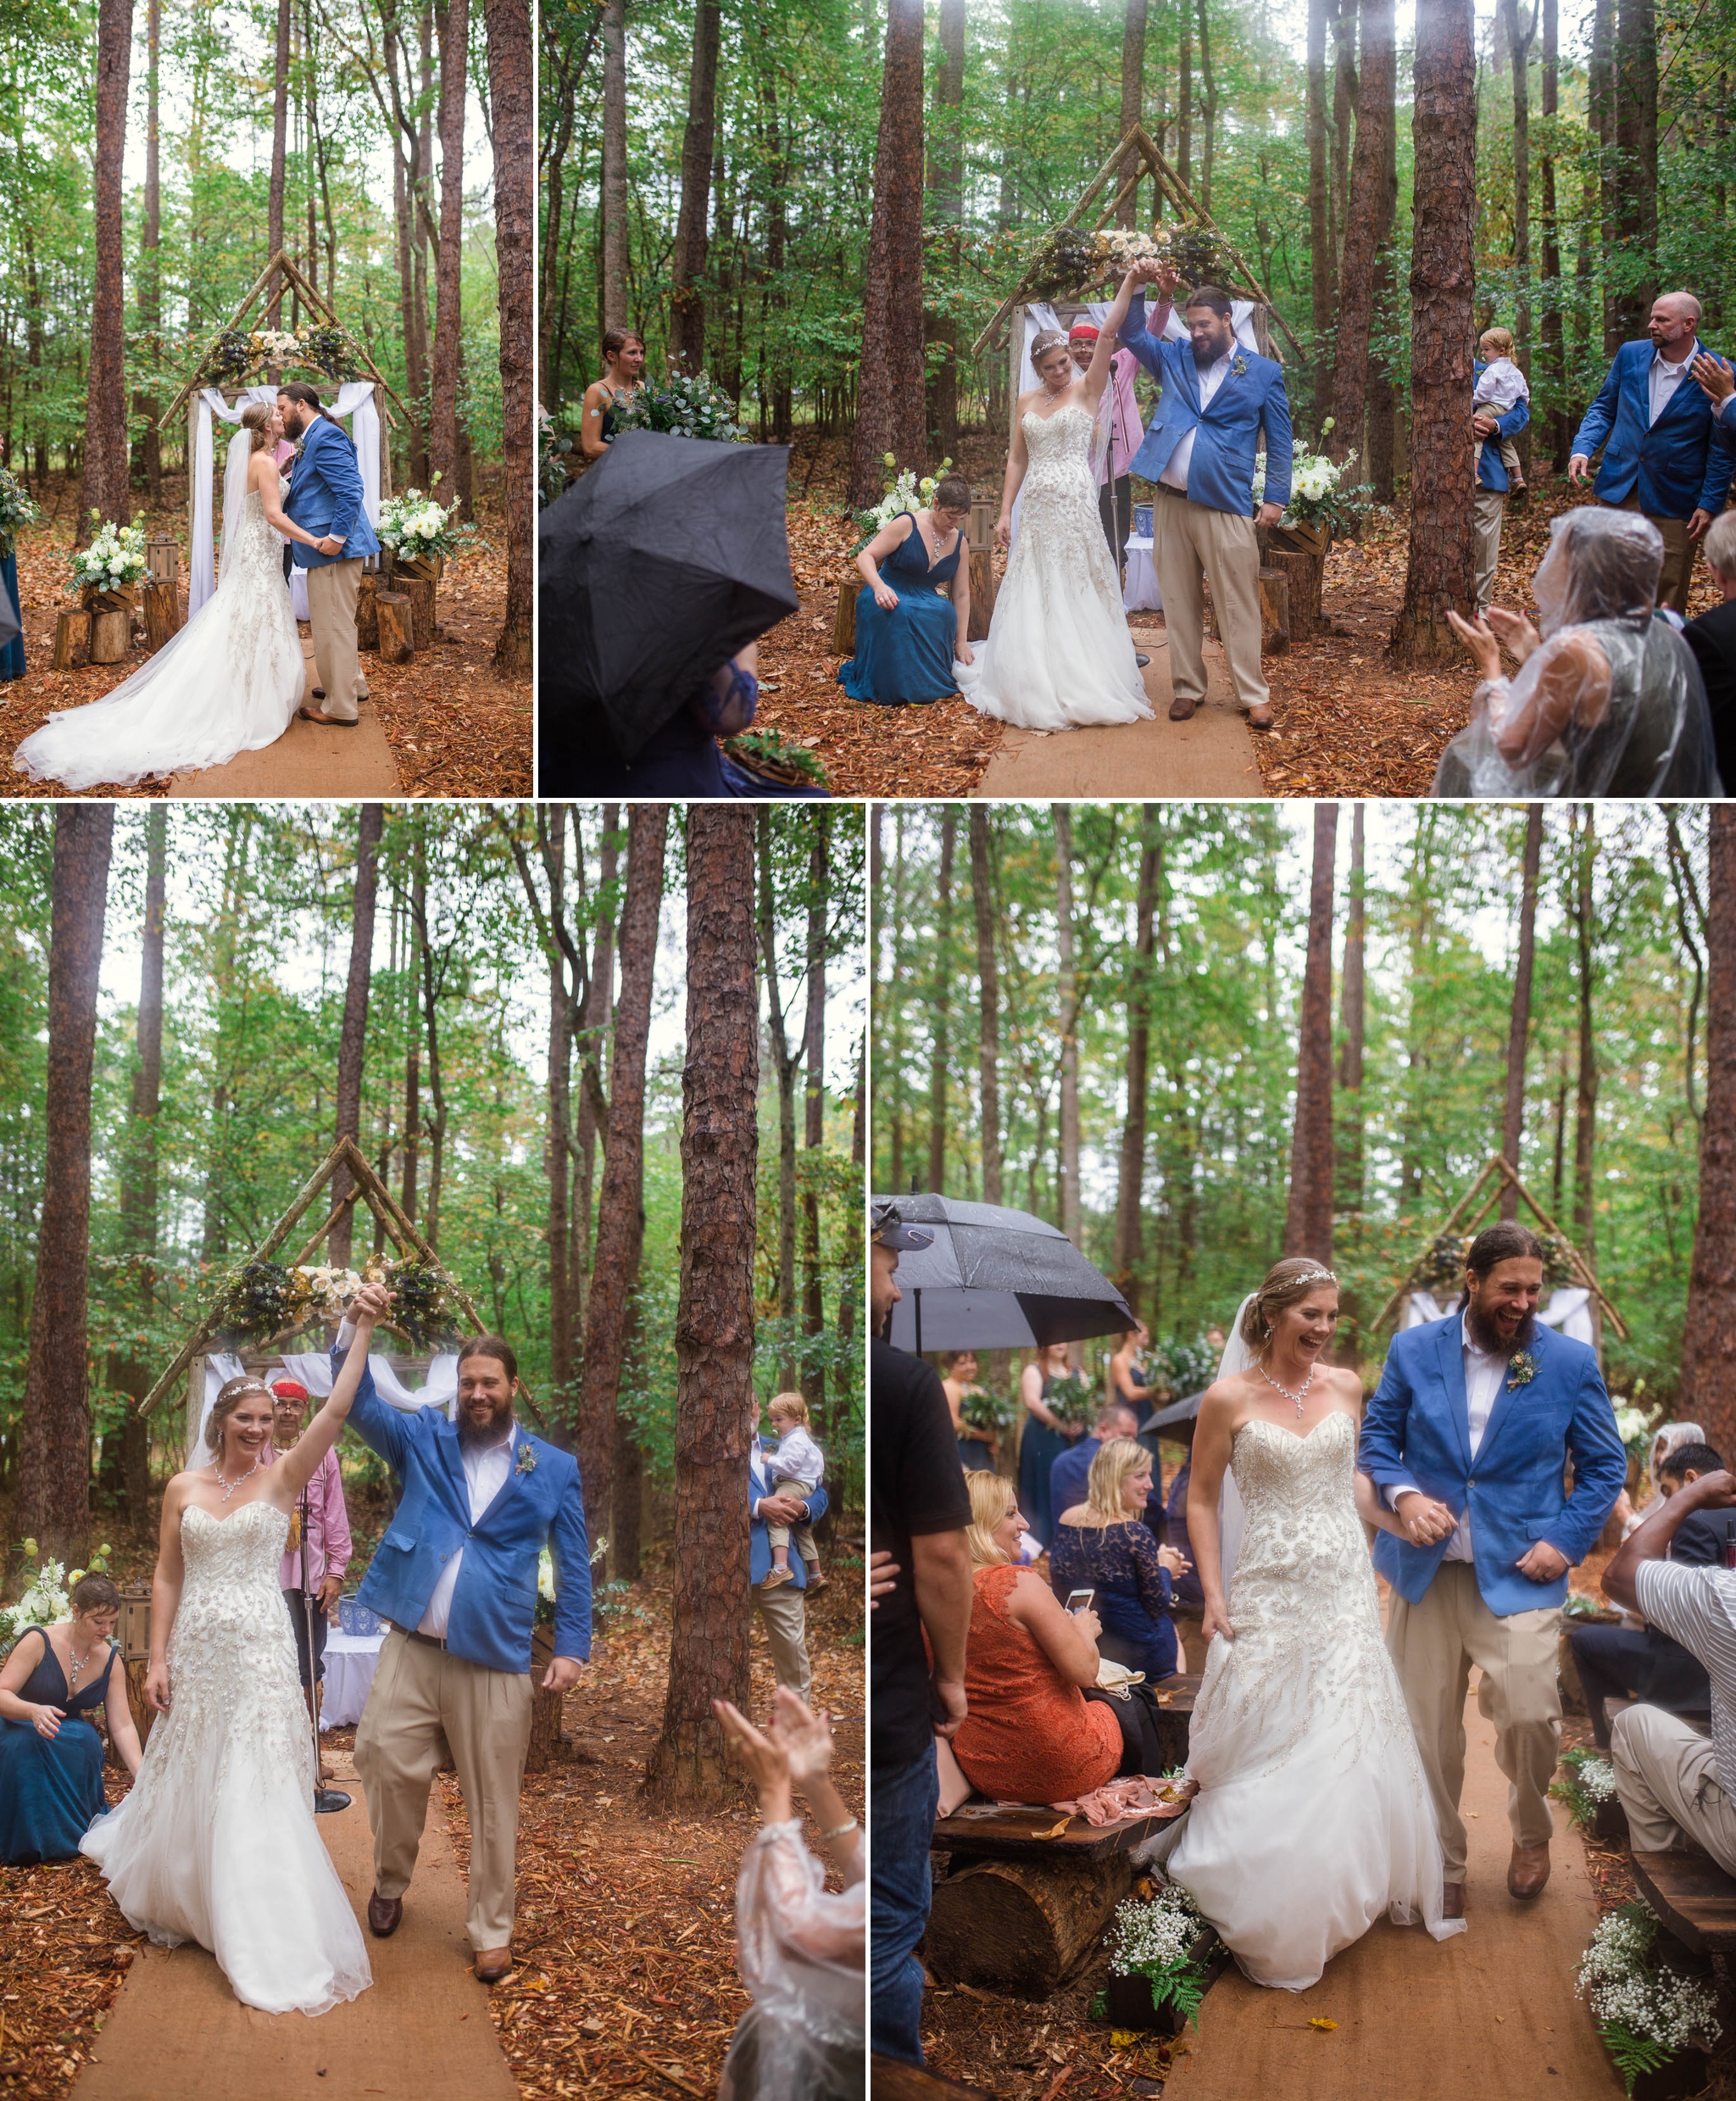 Erik + Meghan - Wedding at the Timerlake Earth Sanctuary in Whitsett North Carolina - Raleigh Wedding Photographer